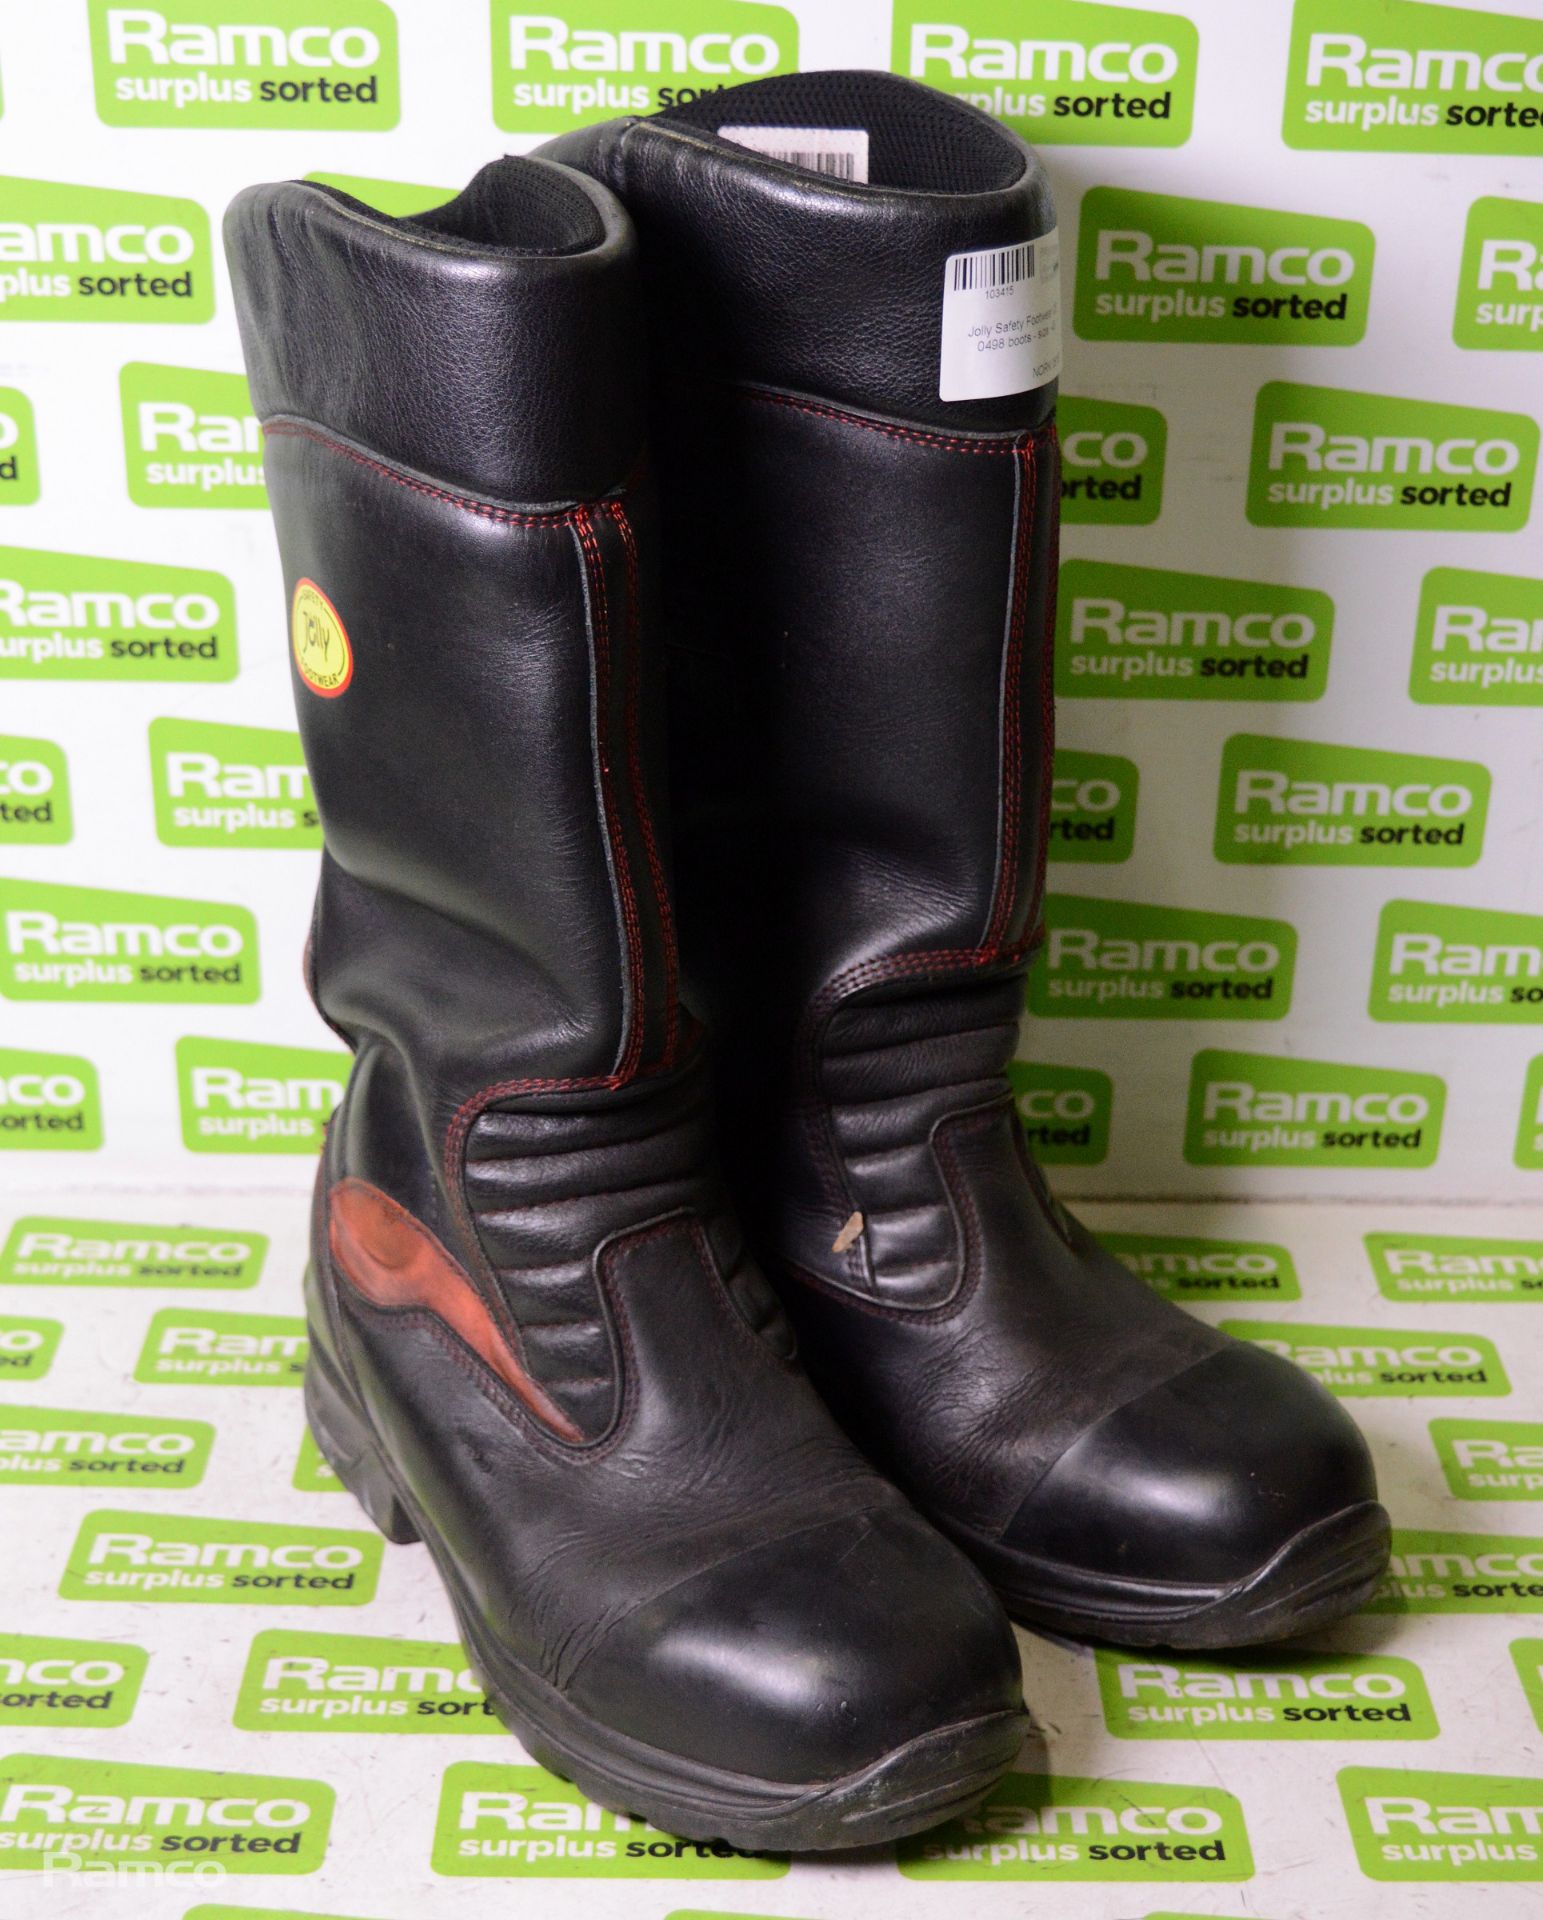 Jolly Safety Footwear CE 0498 boots - size: EU 43, UK 9